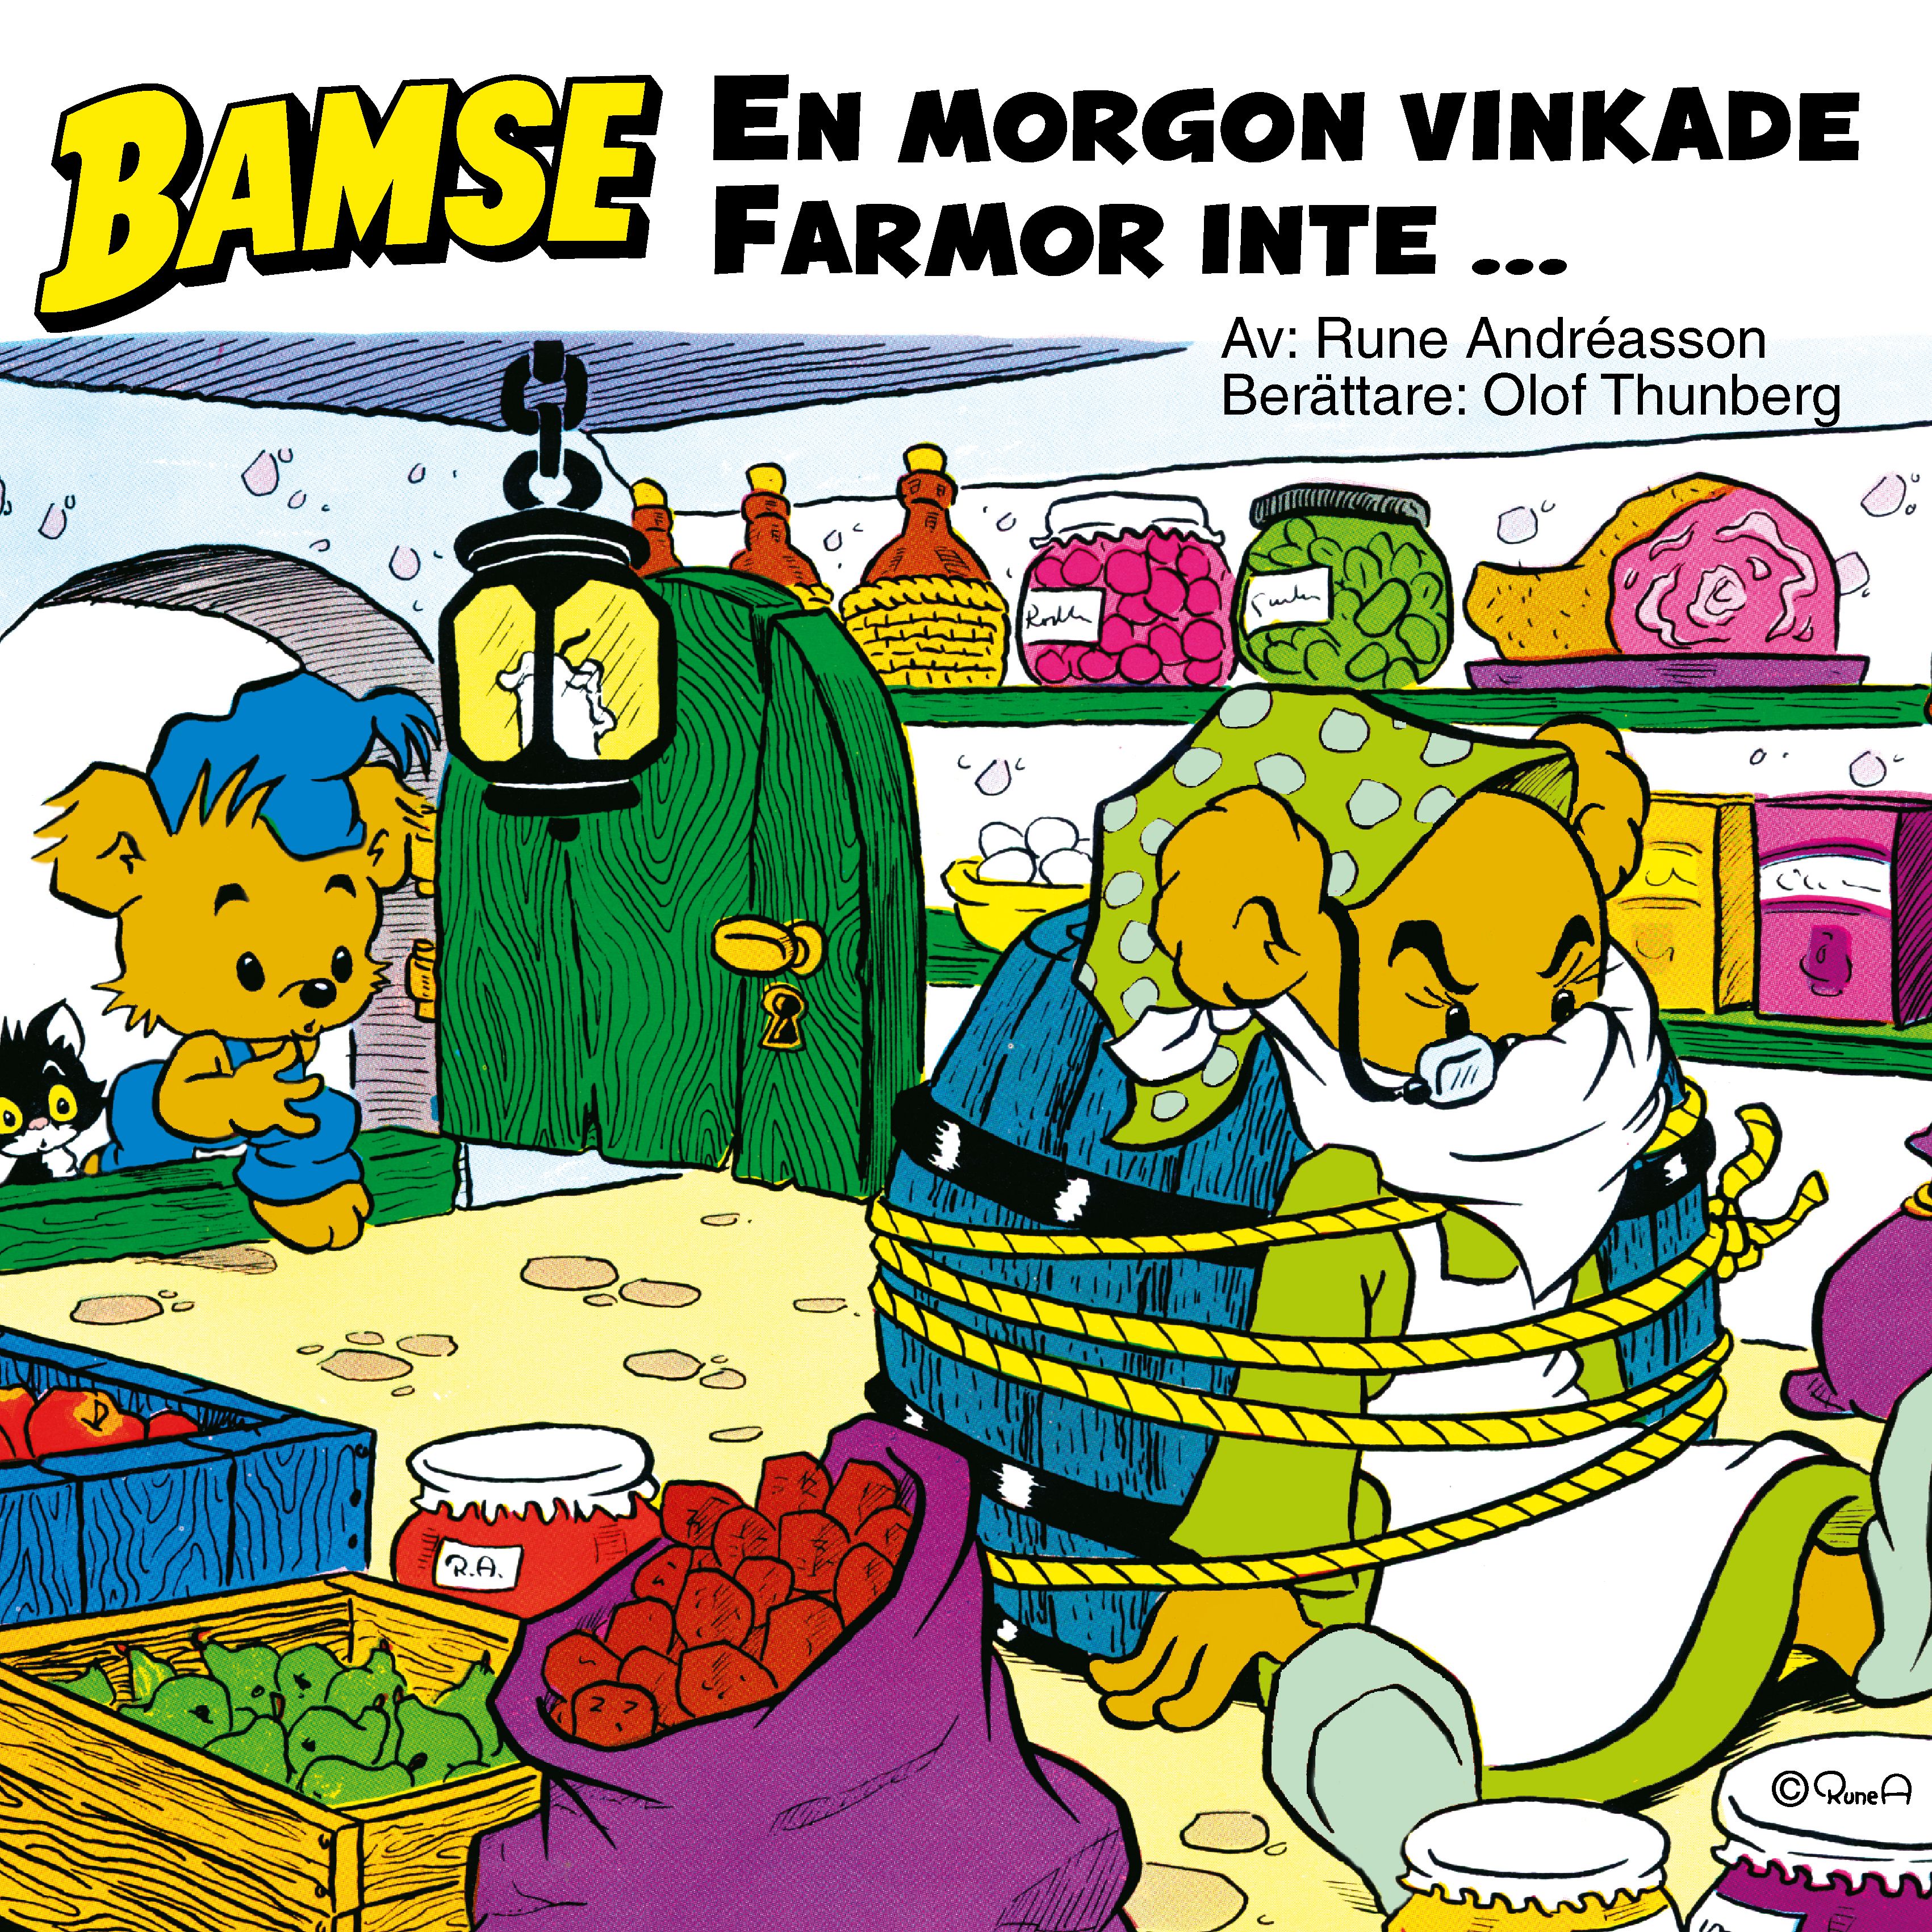 En morgon vinkade Farmor inte..., audiobook by Rune Andréasson